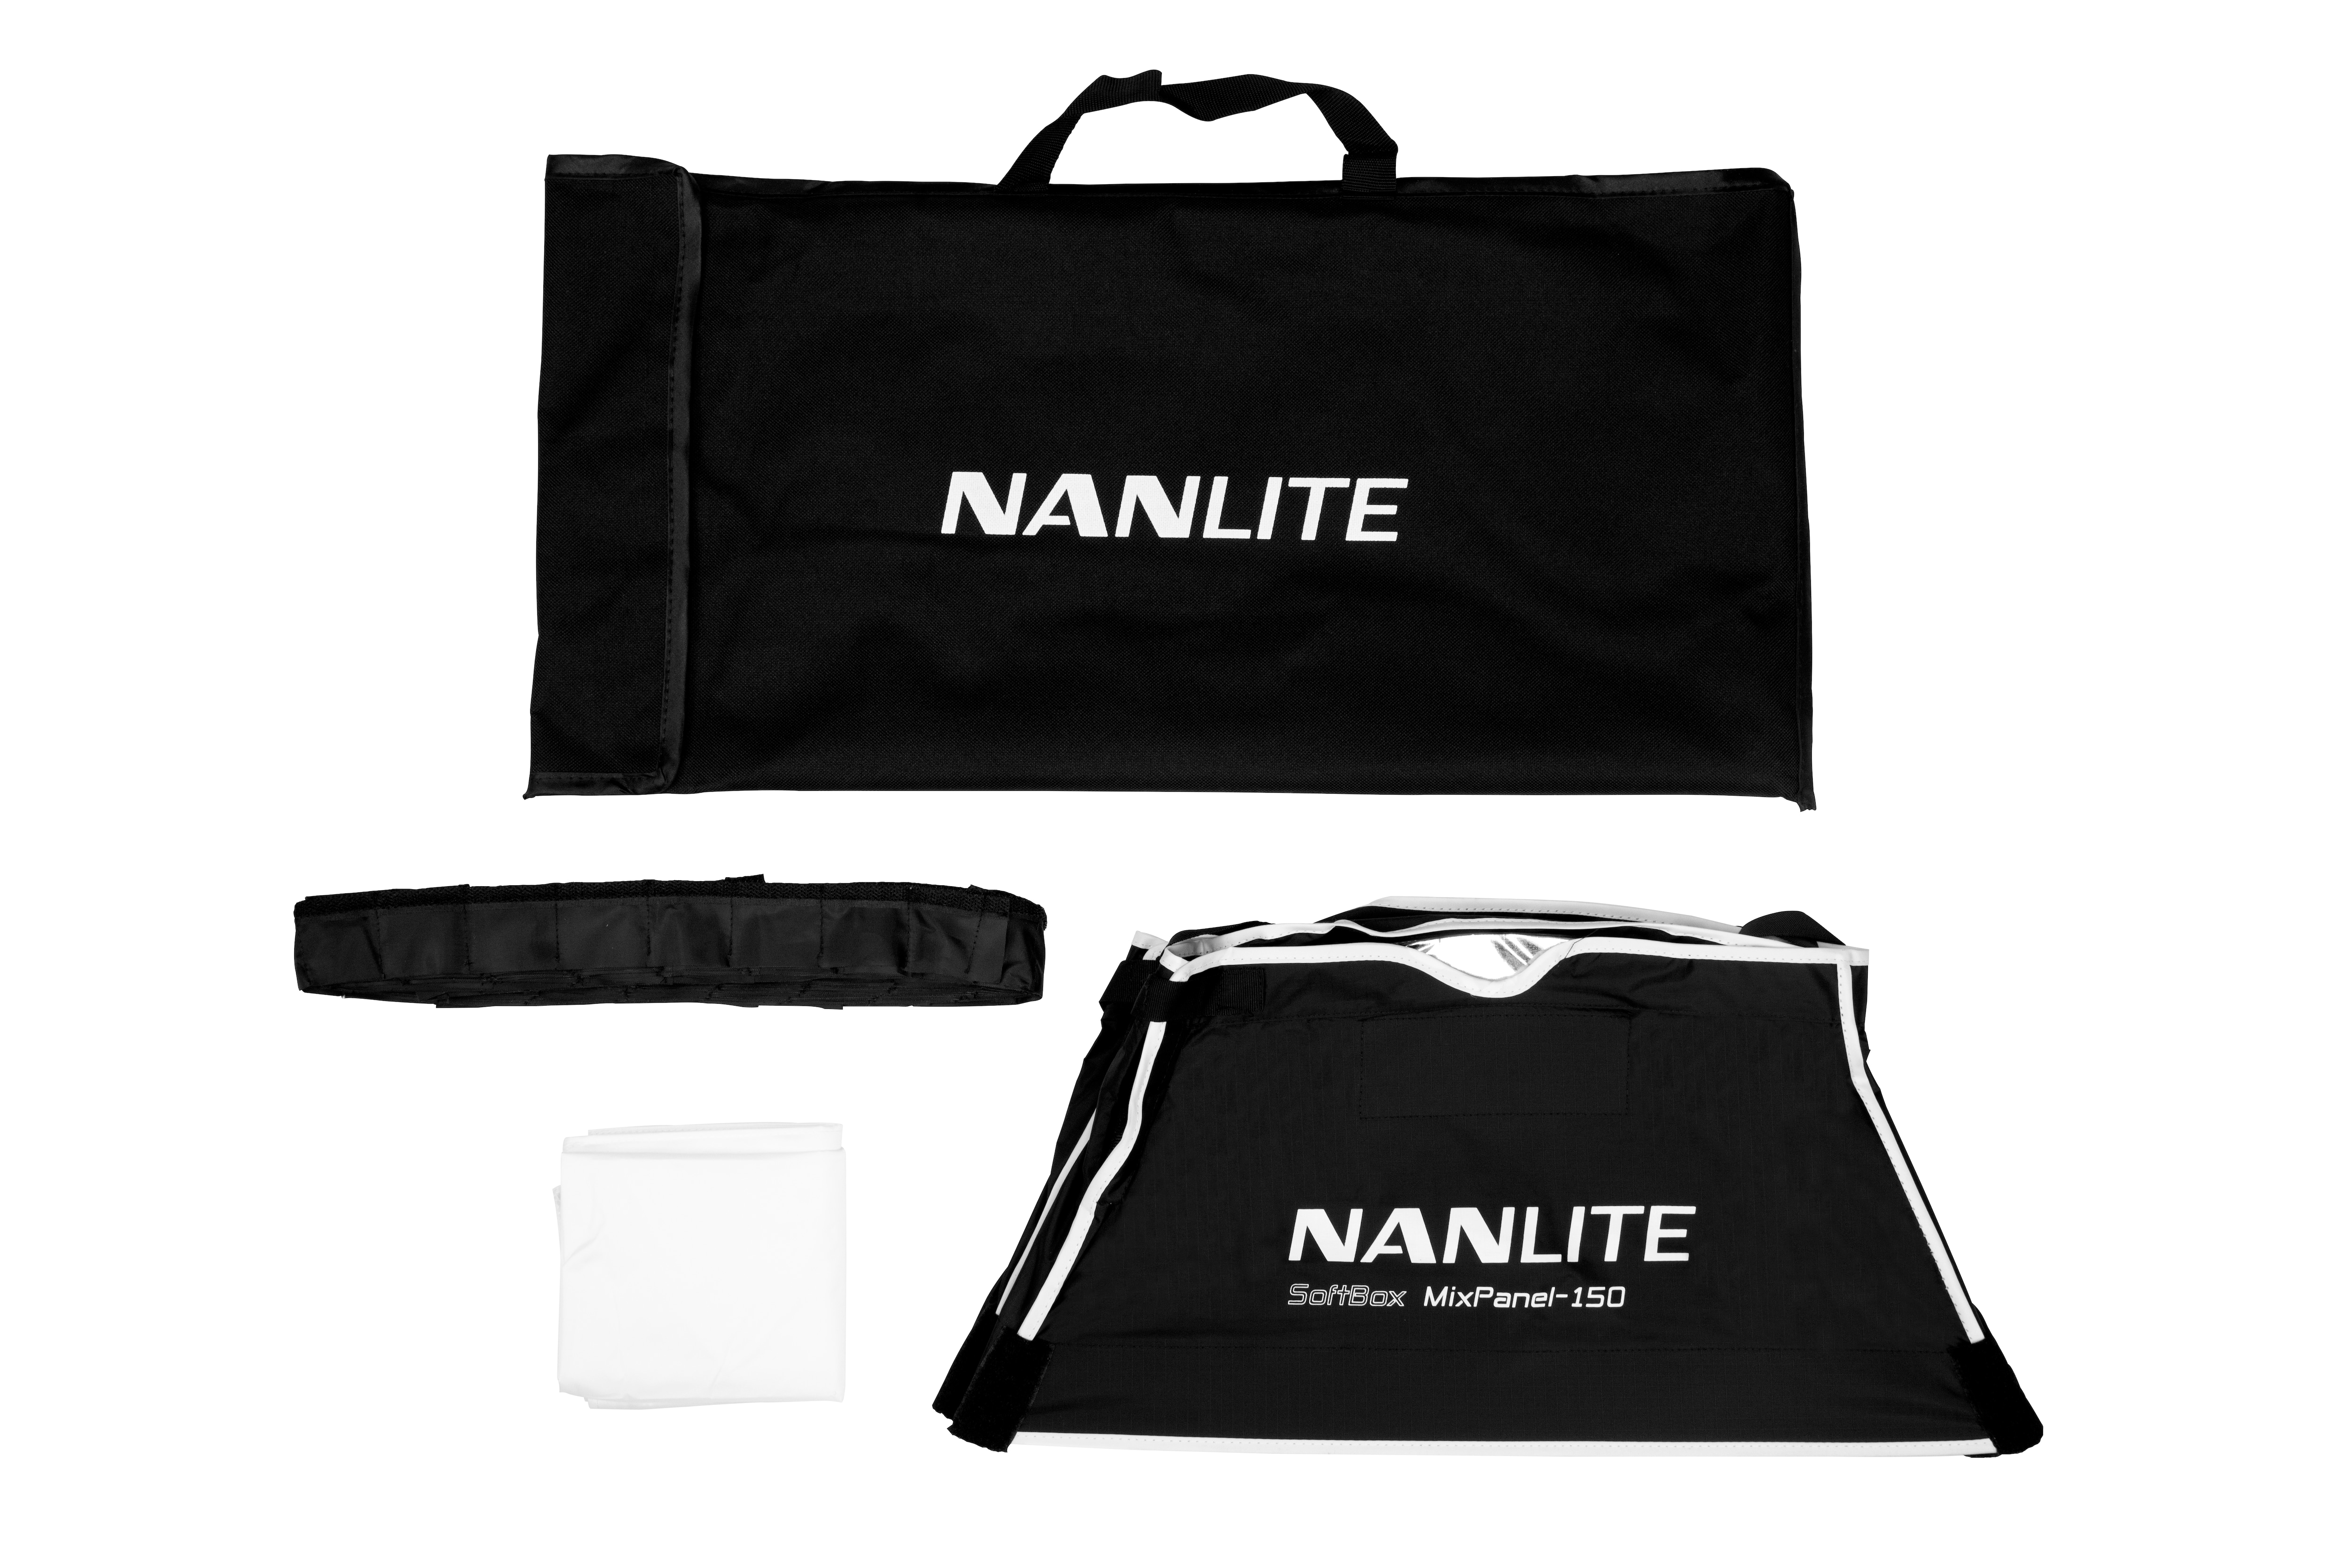 Nanlite Soft Box för MixPanel 150 inklusive raster